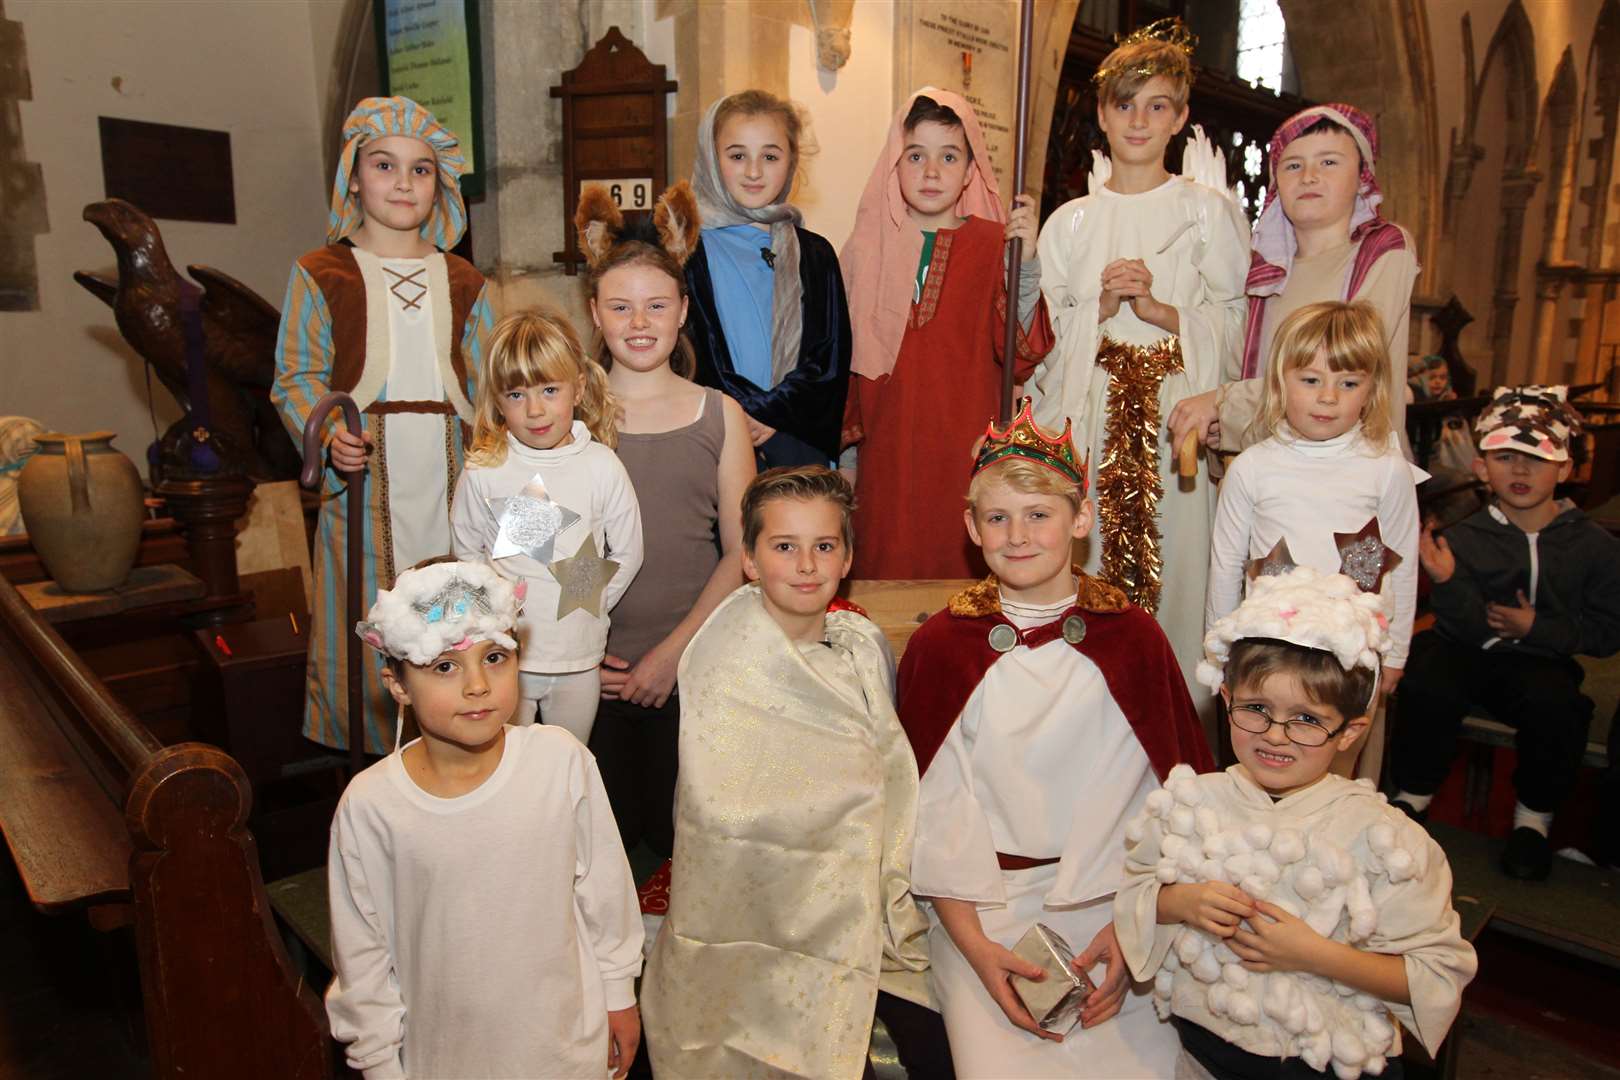 Stars of the Hartlip Primary School nativity play